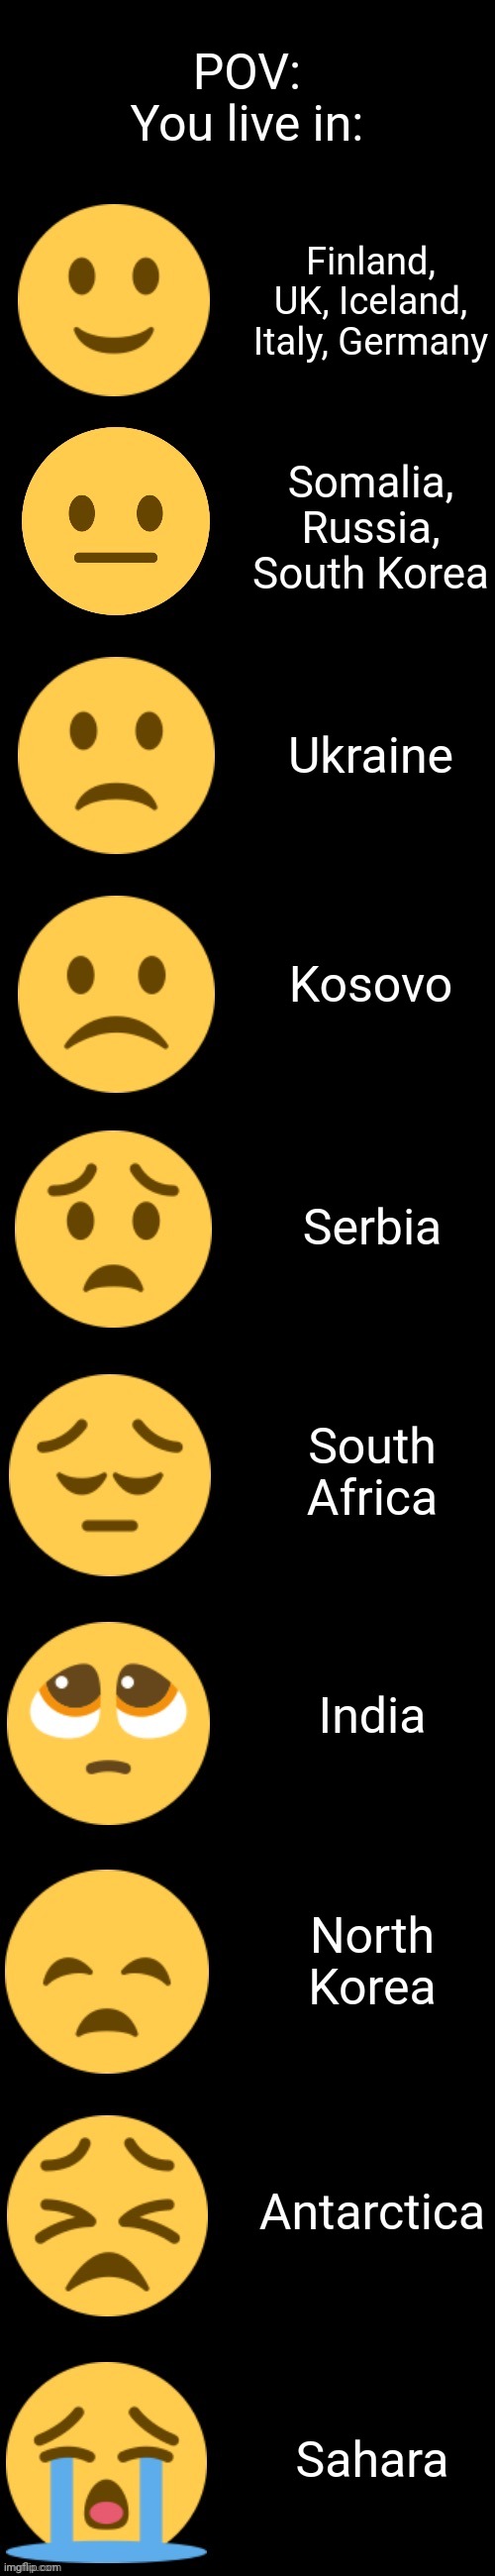 Emoji becoming sad (POV: You live in): | POV: You live in:; Finland, UK, Iceland, Italy, Germany; Somalia, Russia, South Korea; Ukraine; Kosovo; Serbia; South Africa; India; North Korea; Antarctica; Sahara | image tagged in emoji becoming sad | made w/ Imgflip meme maker